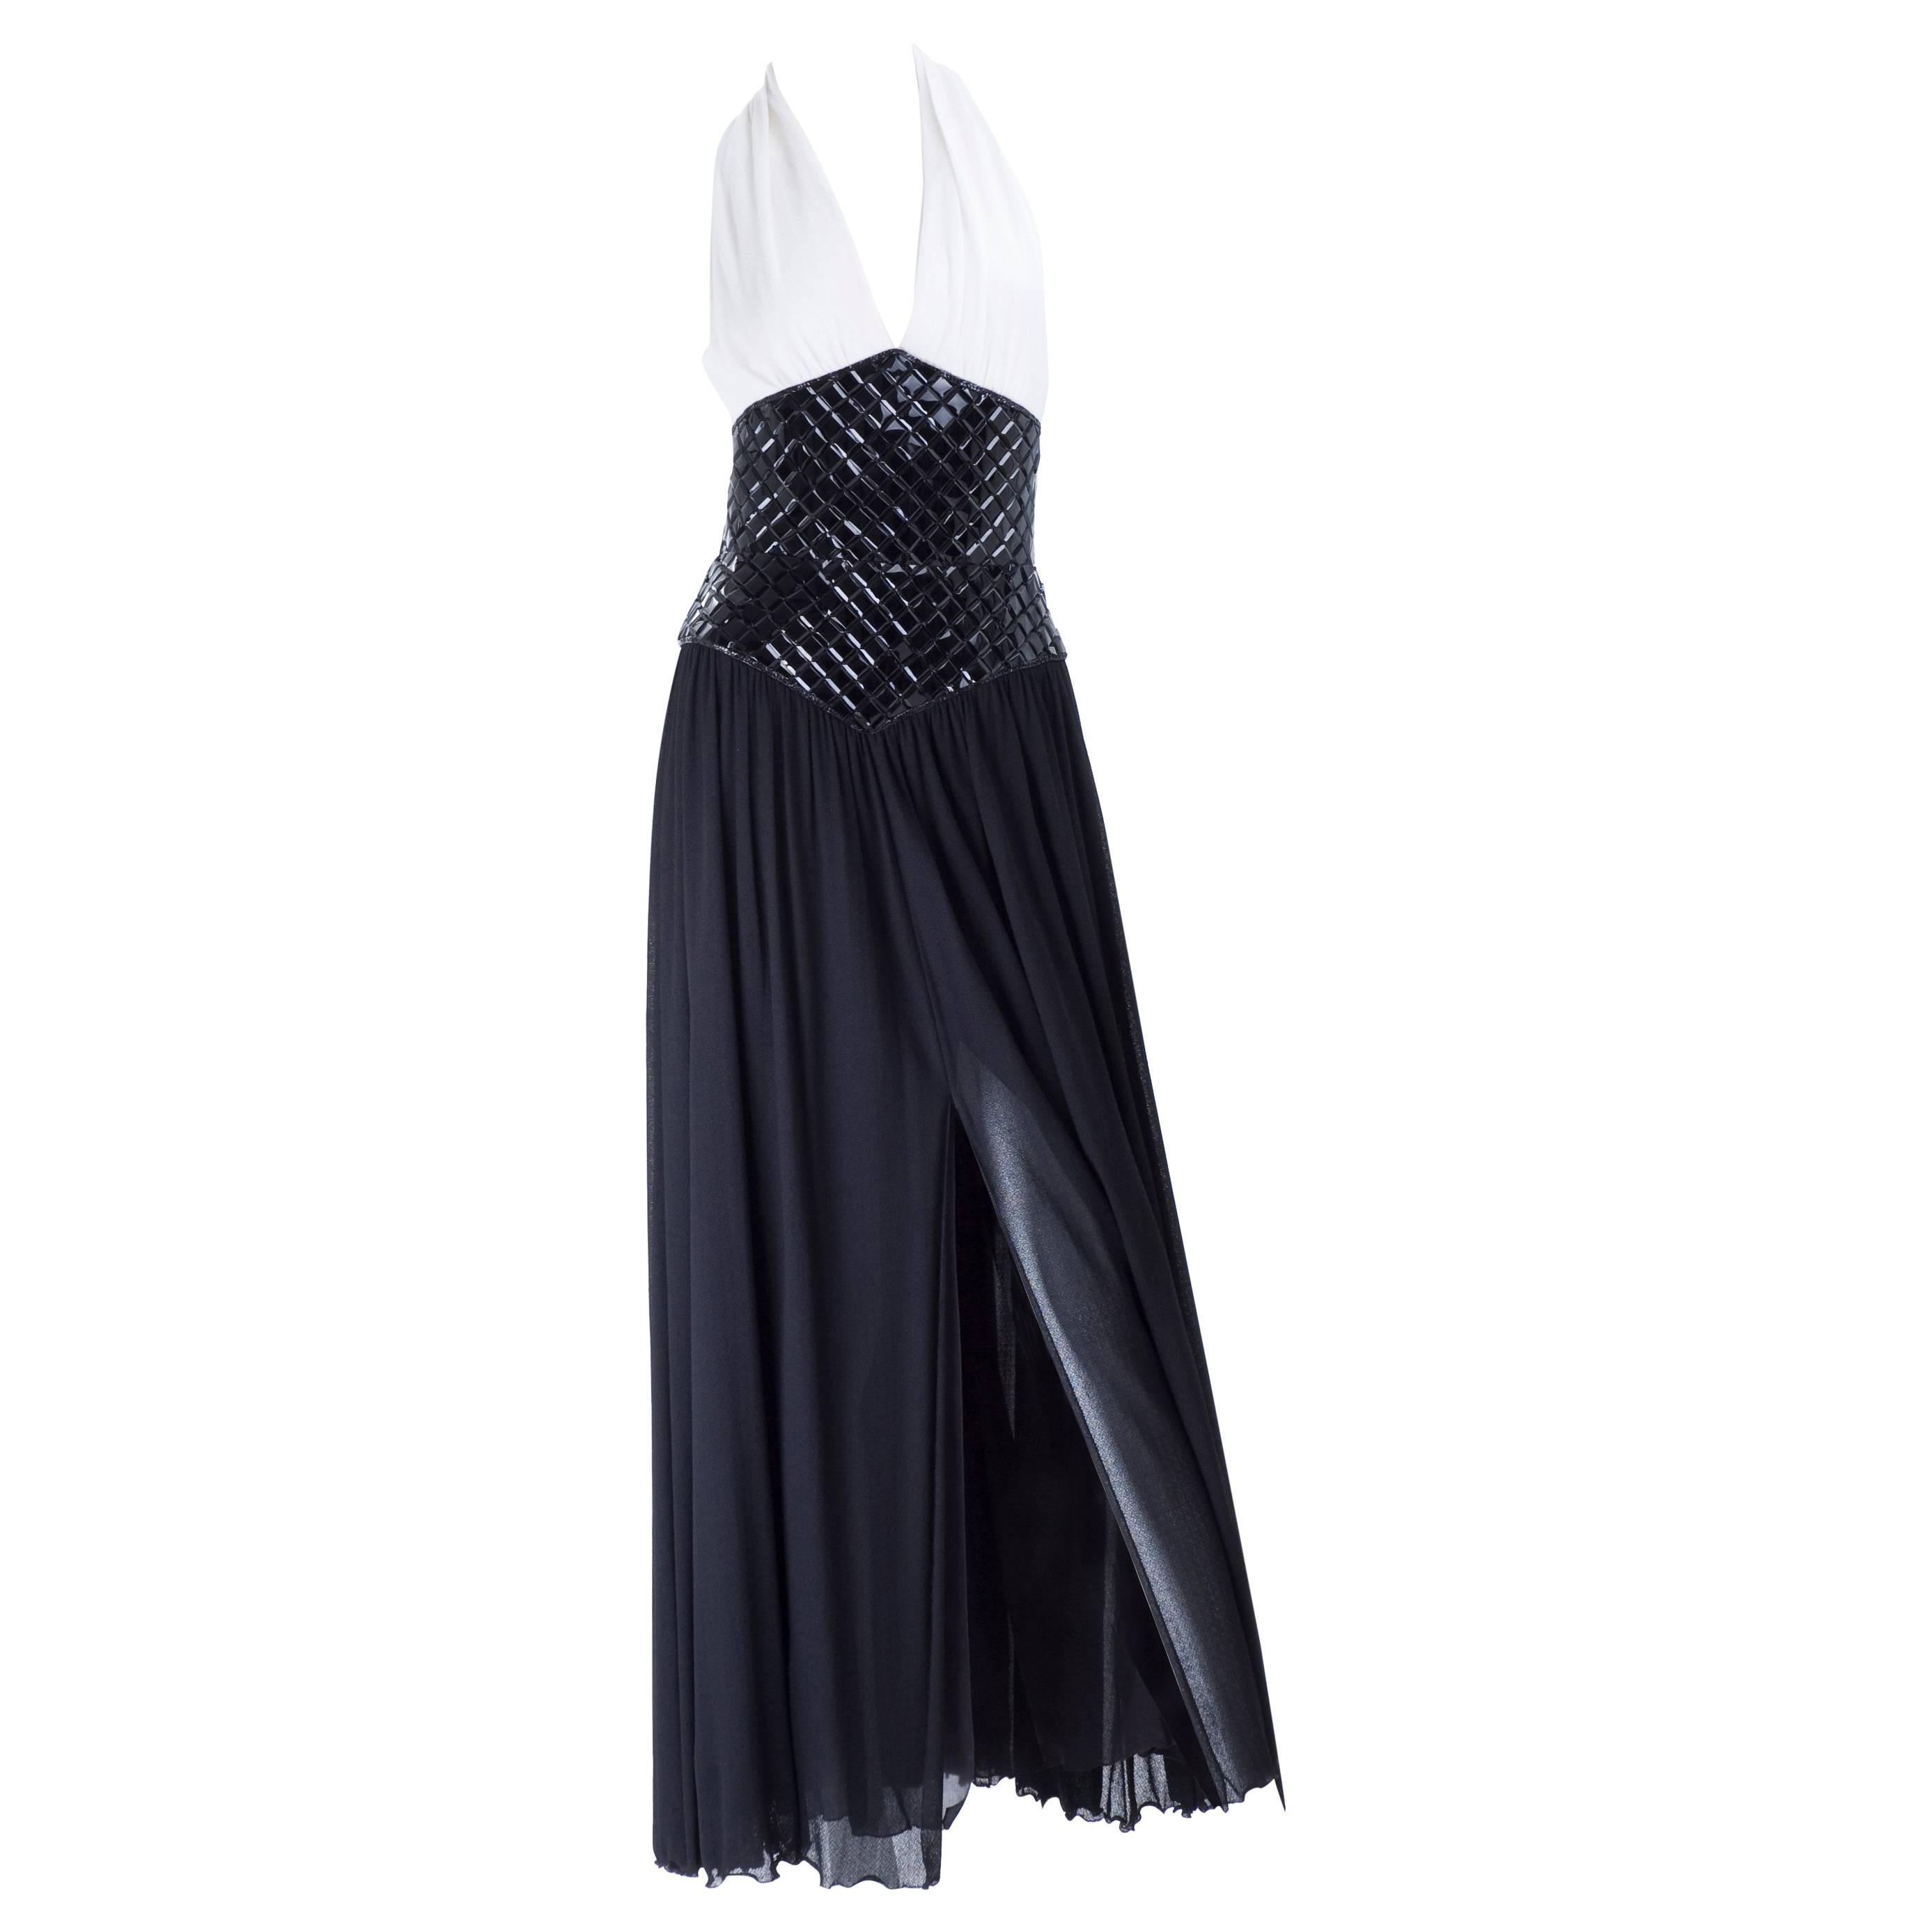 1995 Vintage Chanel Evening Dress Black & White Documented For Sale